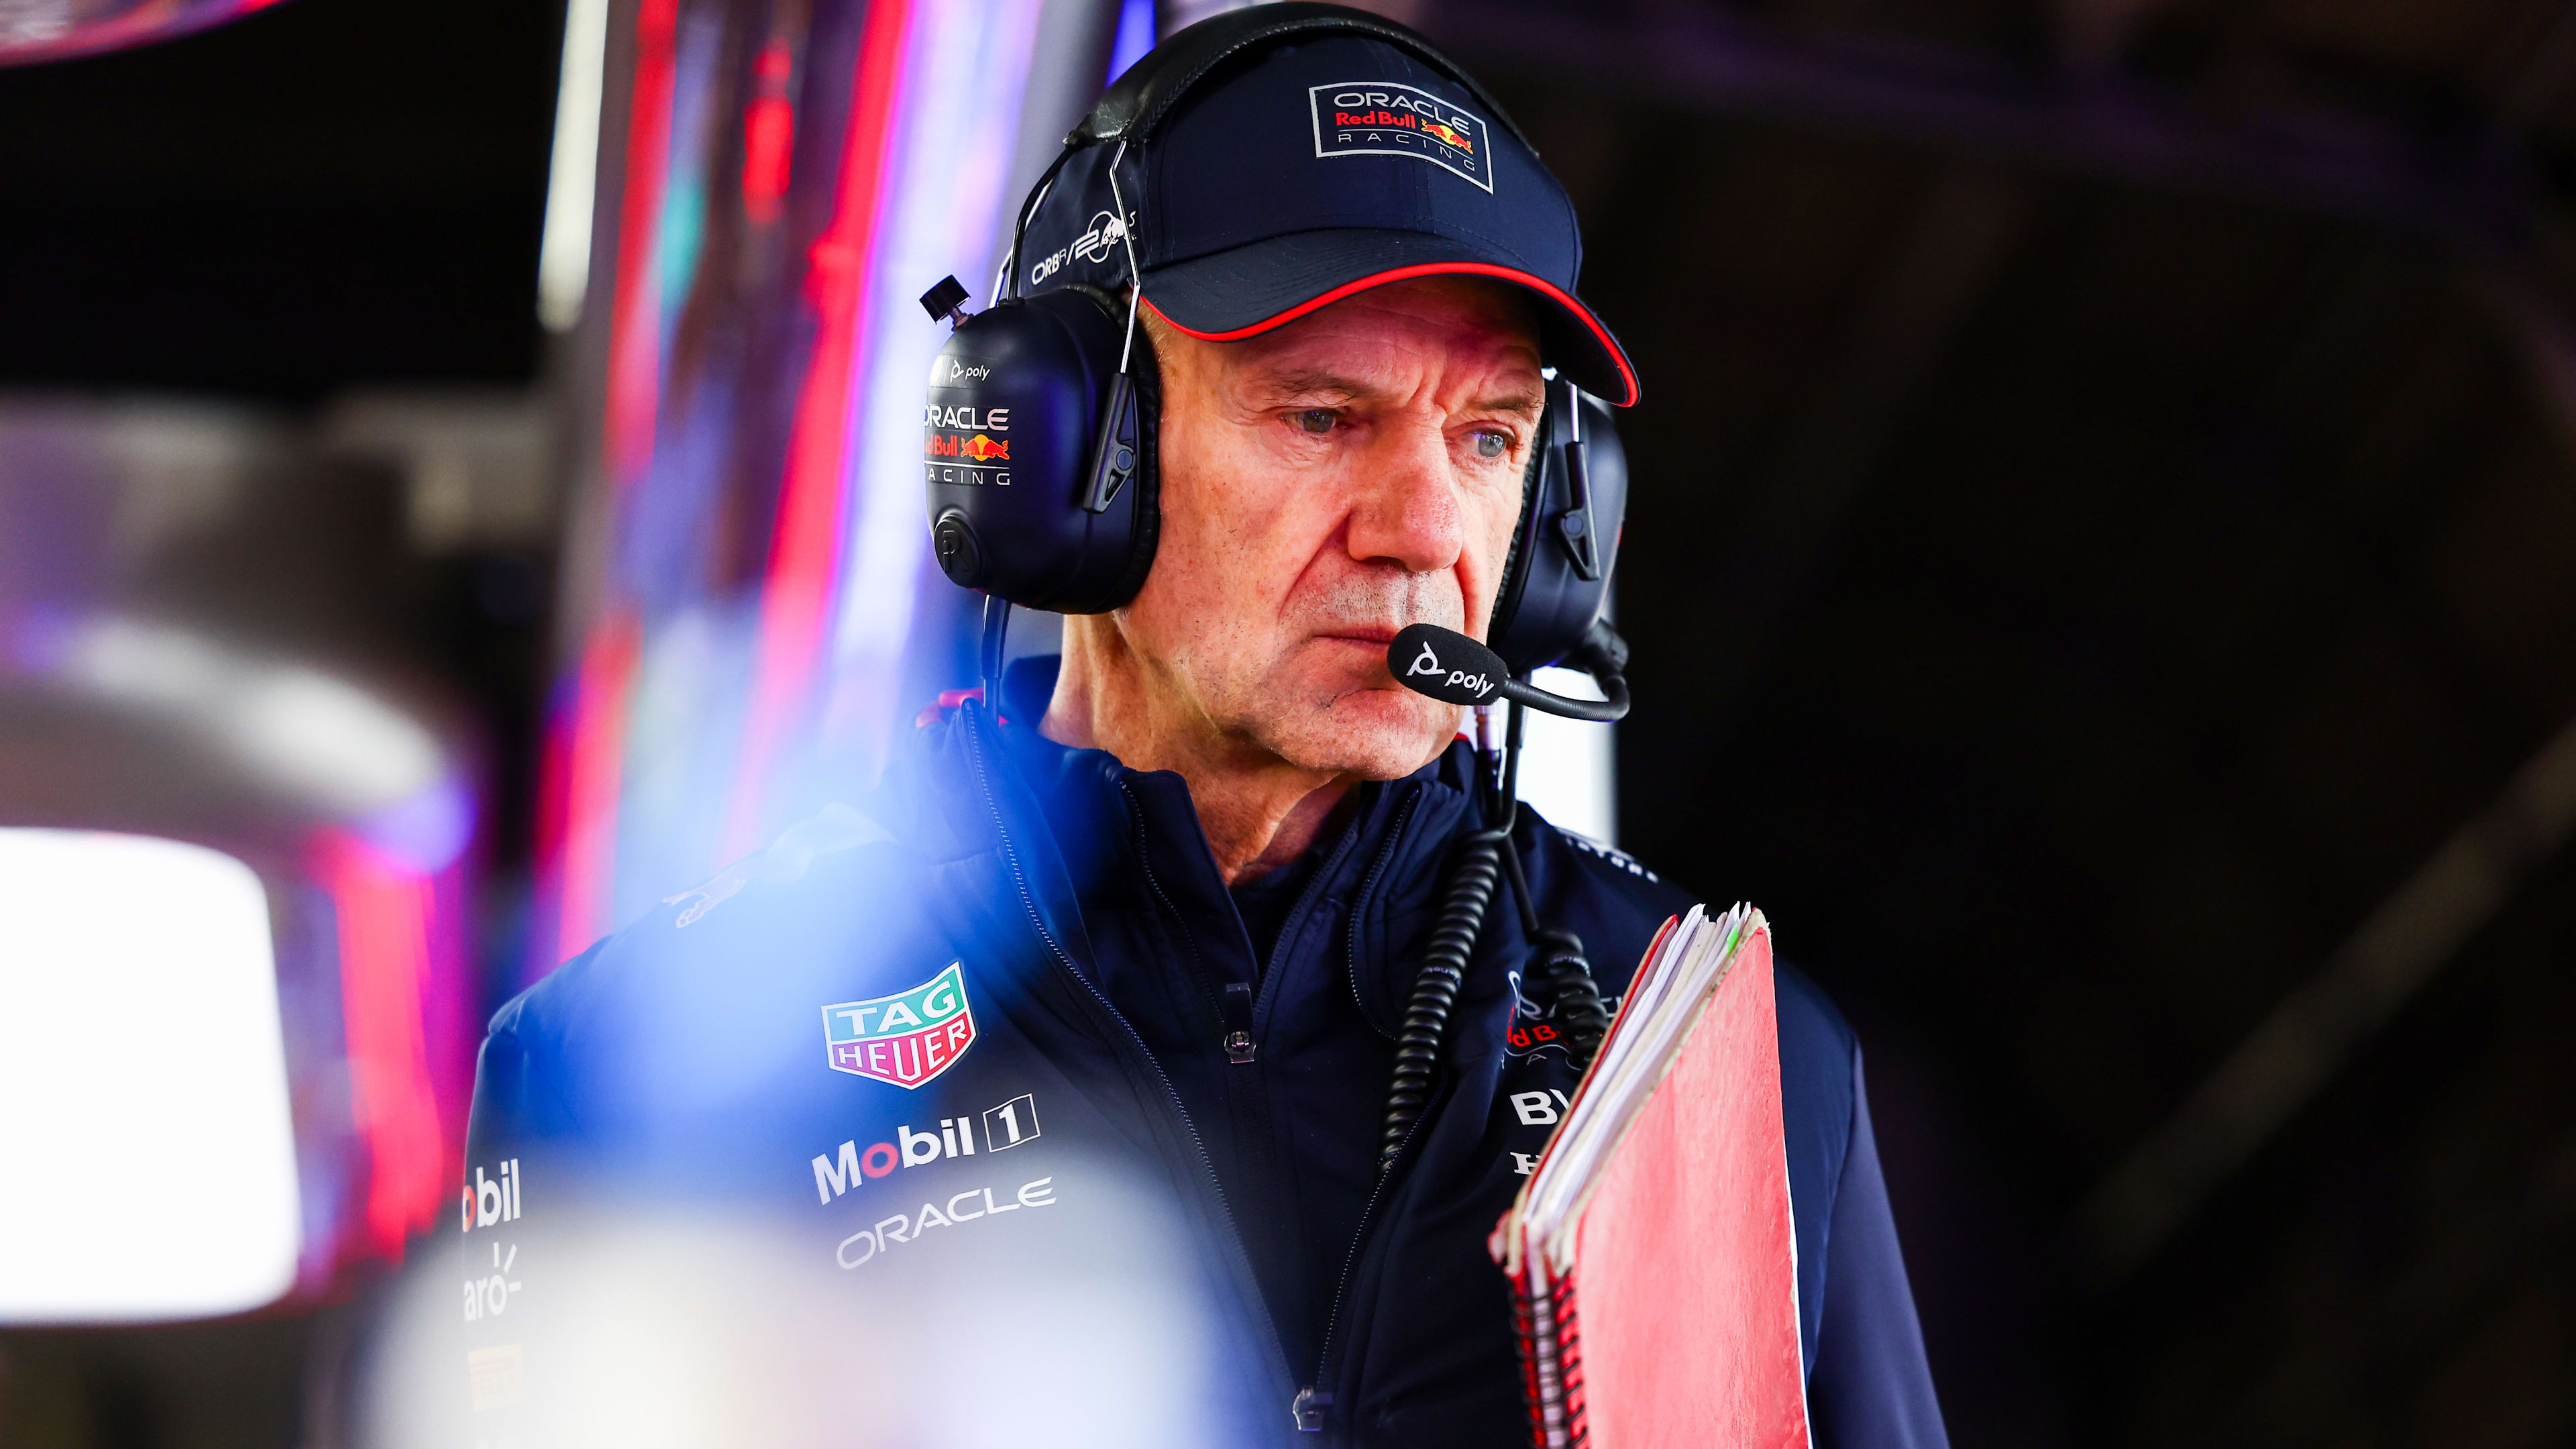 Red Bull confirme que le légendaire designer de F1 Adrian Newey va quitter l’équipe